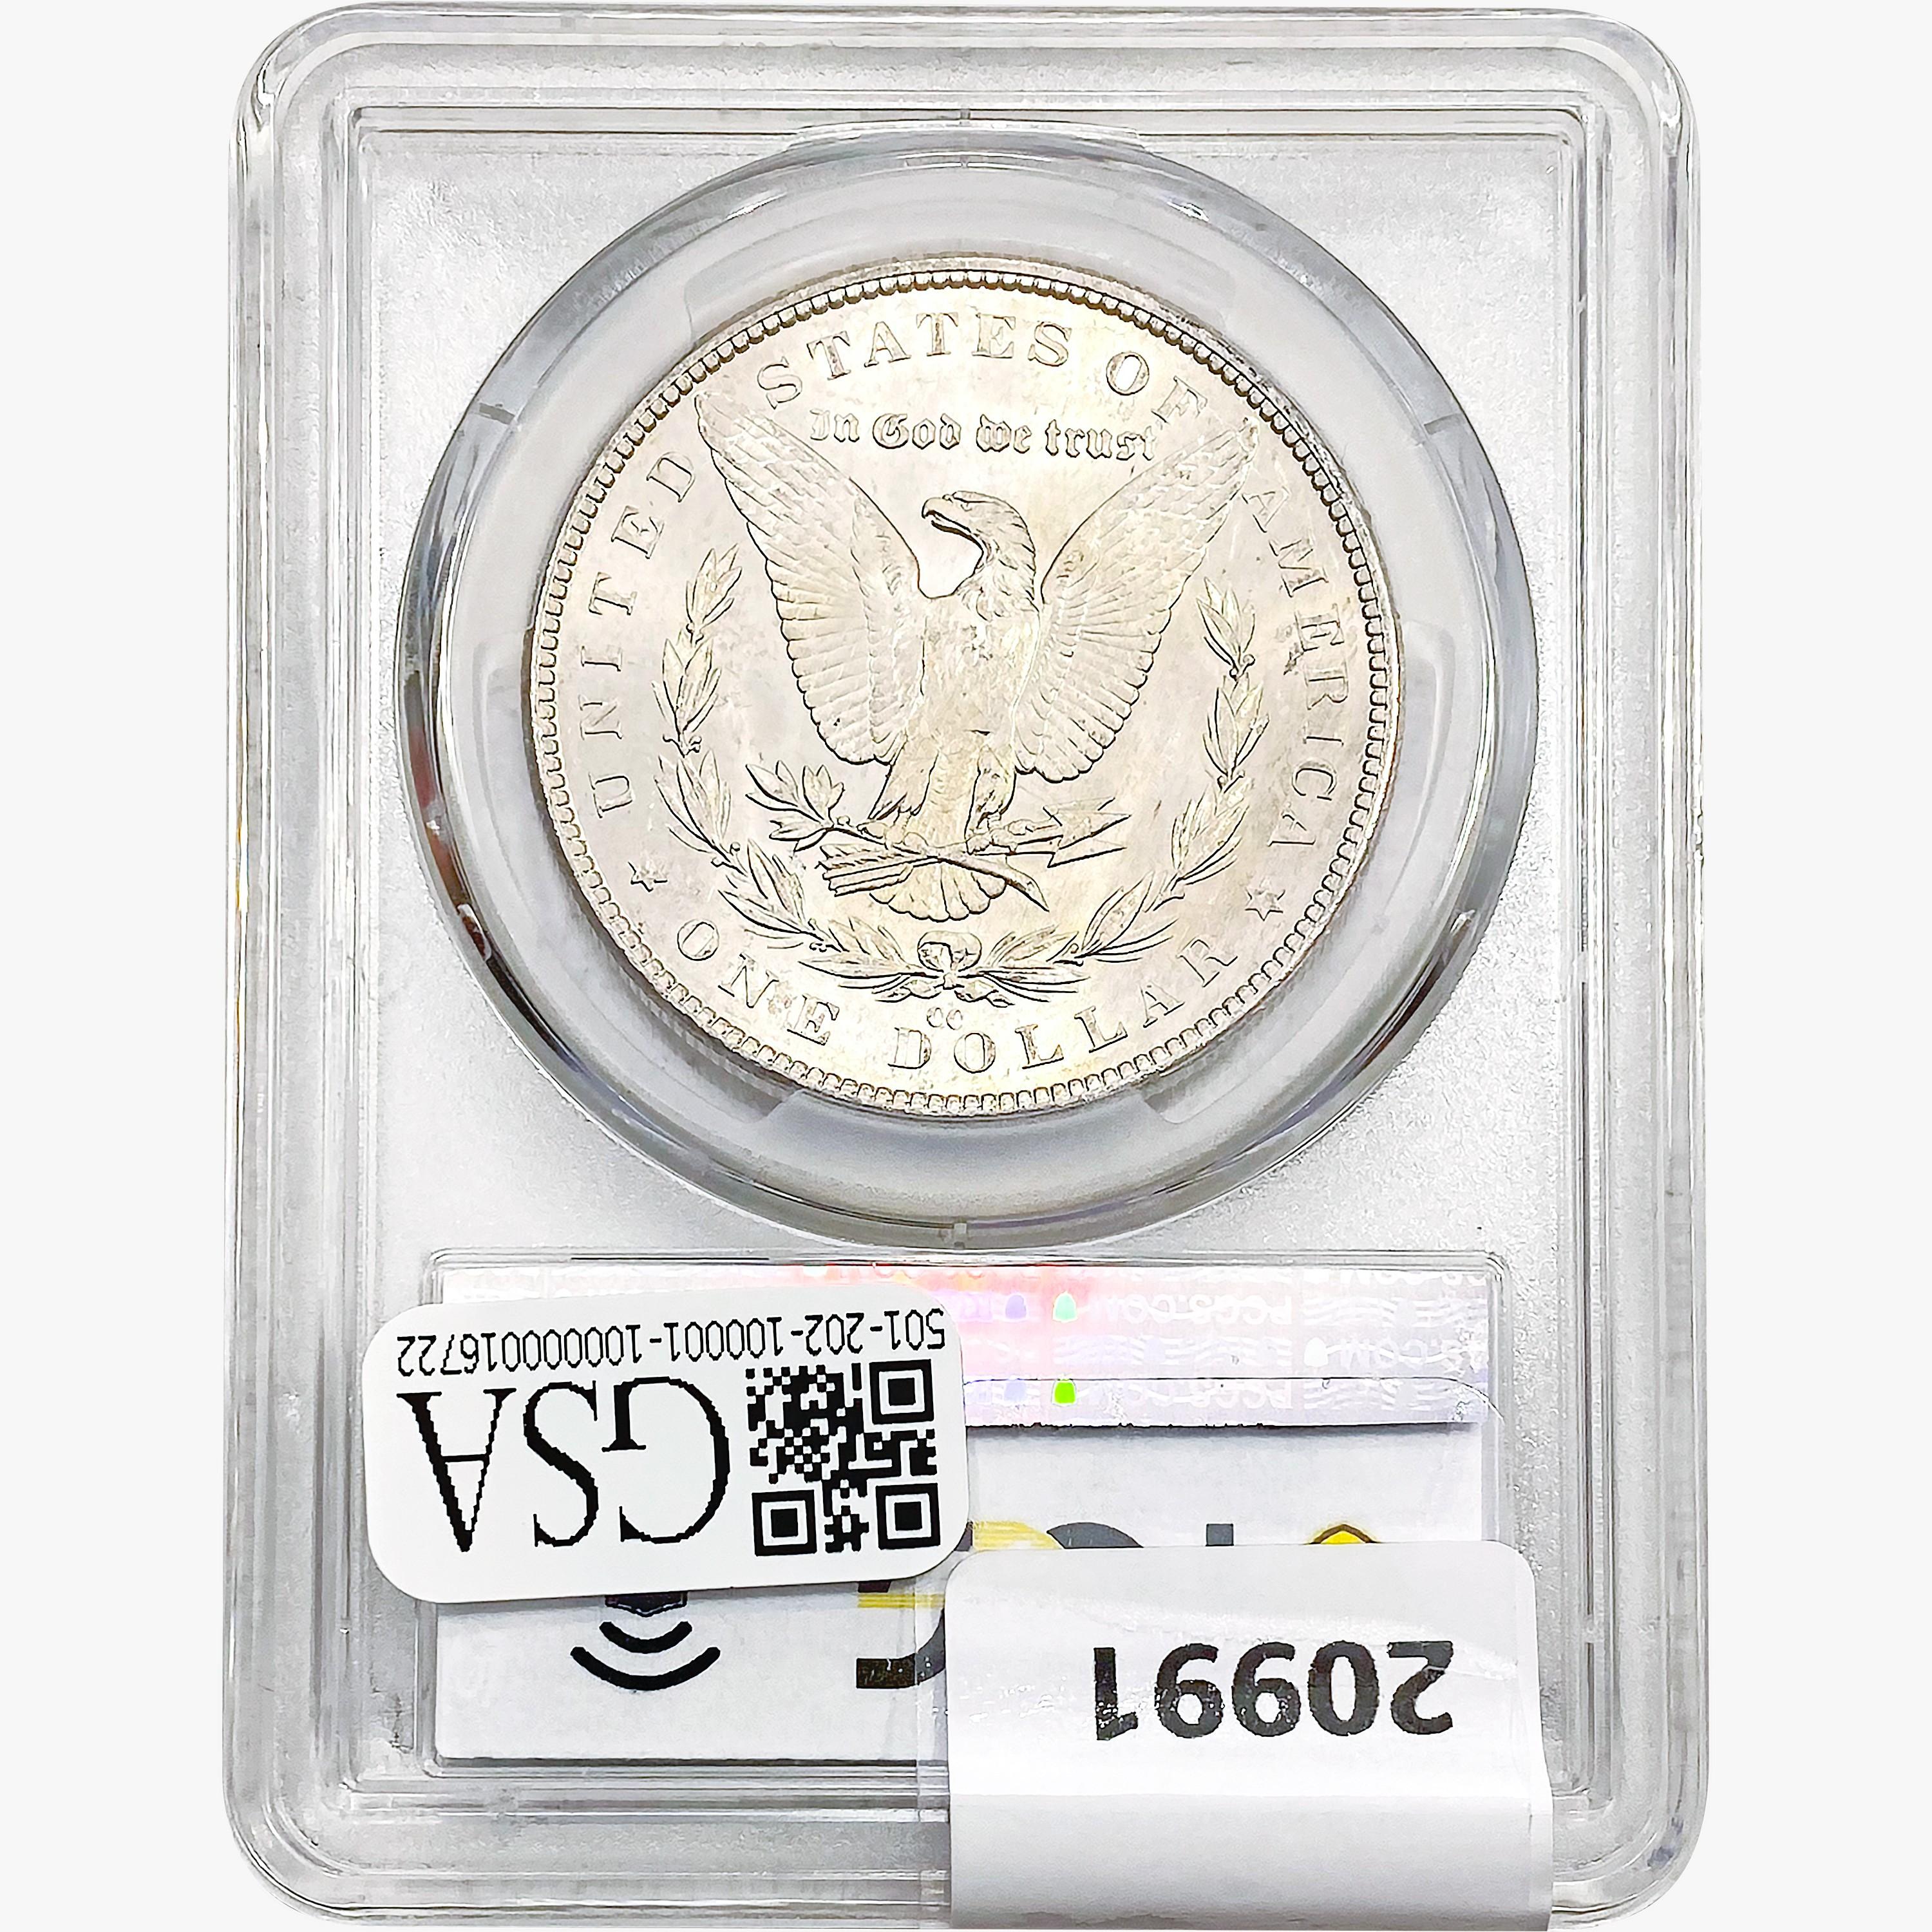 1882-CC Morgan Silver Dollar PCGS MS64+